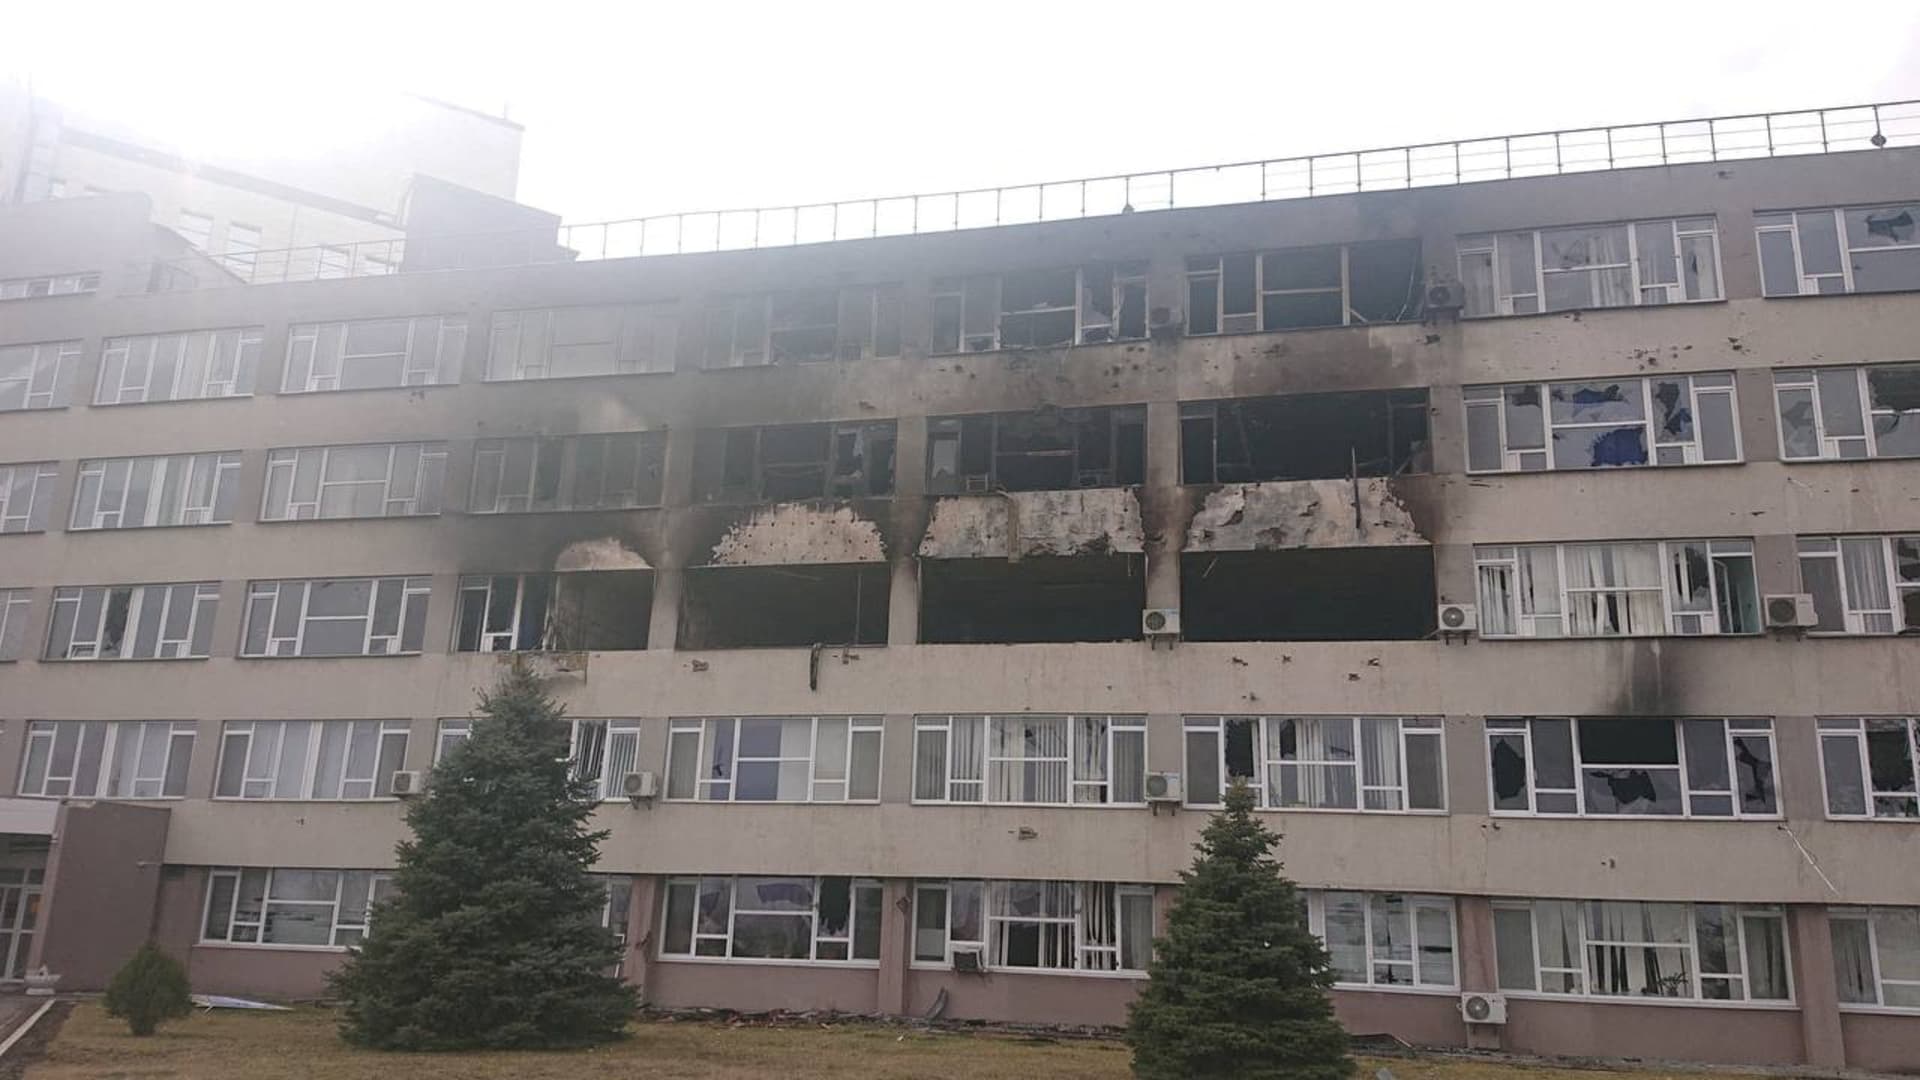 A view shows a damaged building at the Zaporizhzhia Nuclear Power Plant compound, amid Russia's invasion of Ukraine, in Enerhodar, Zaporizhzhia region, Ukraine, in this handout picture released March 17, 2022.